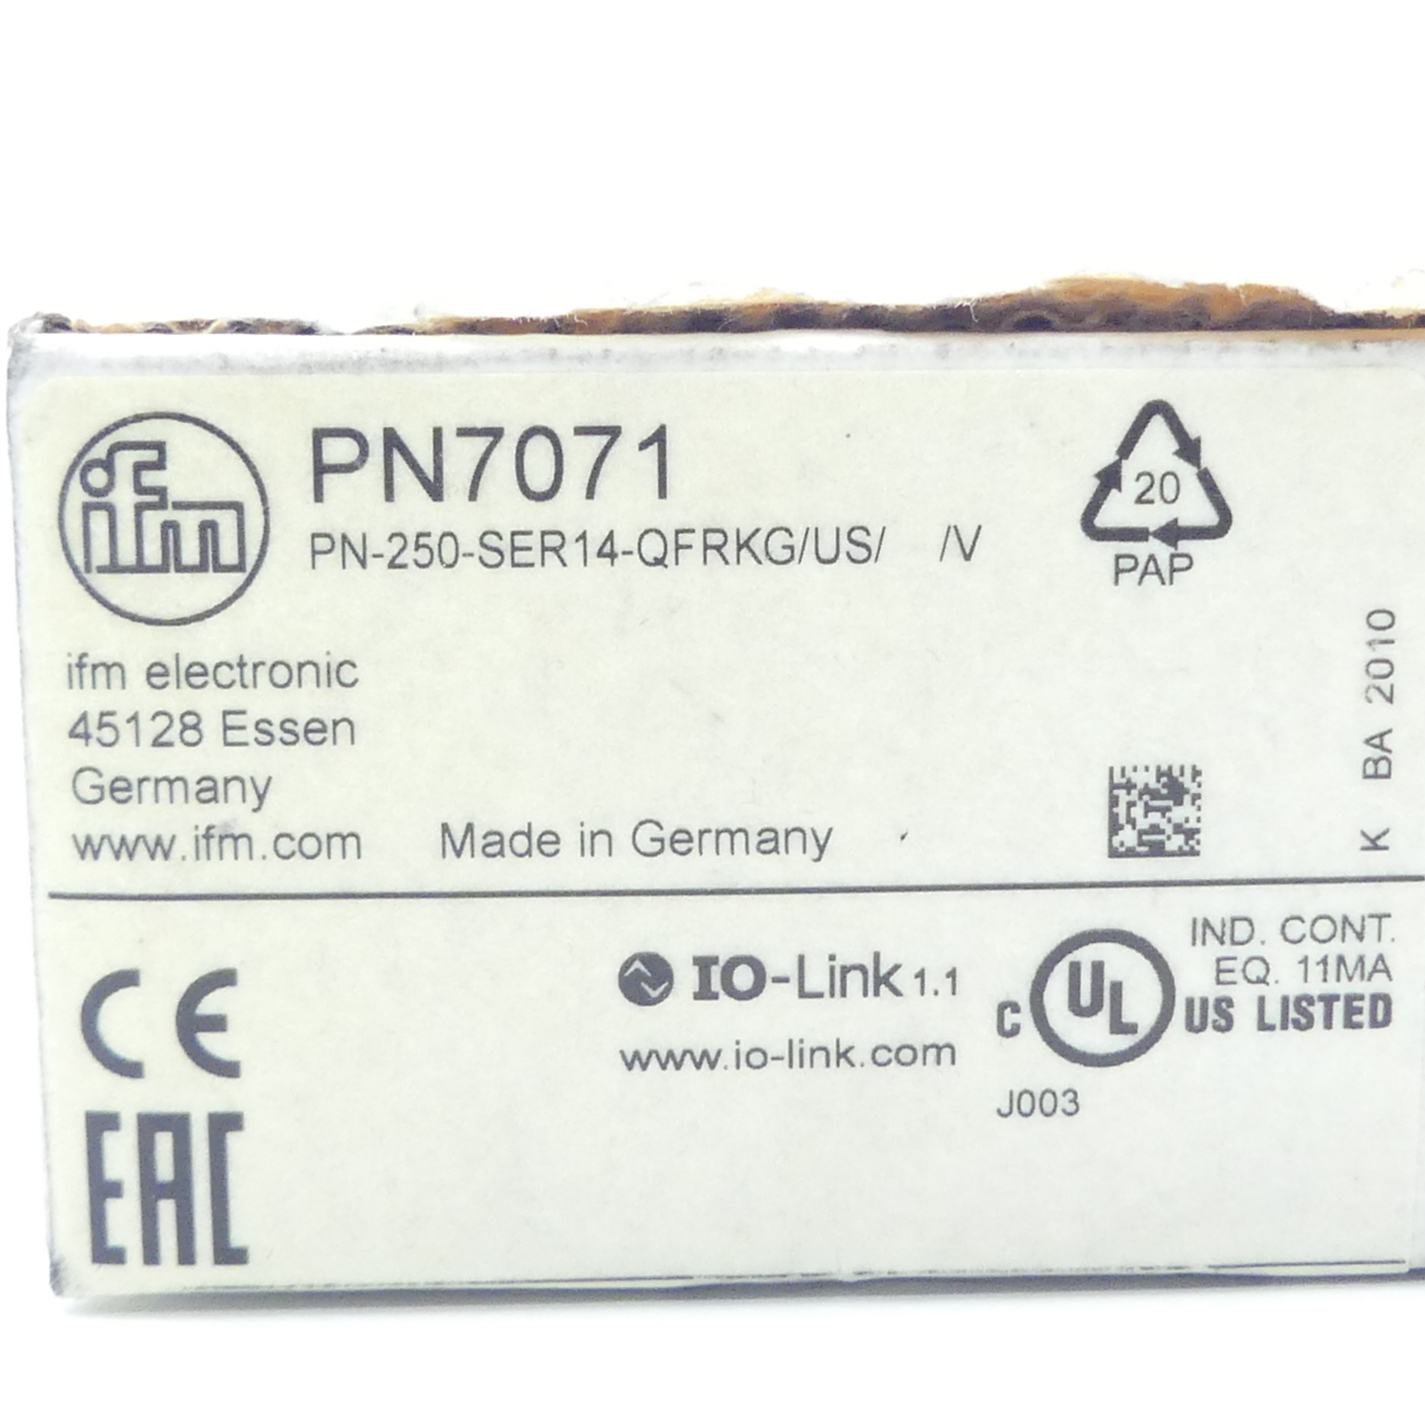 Drucksensor mit Display PN7071 